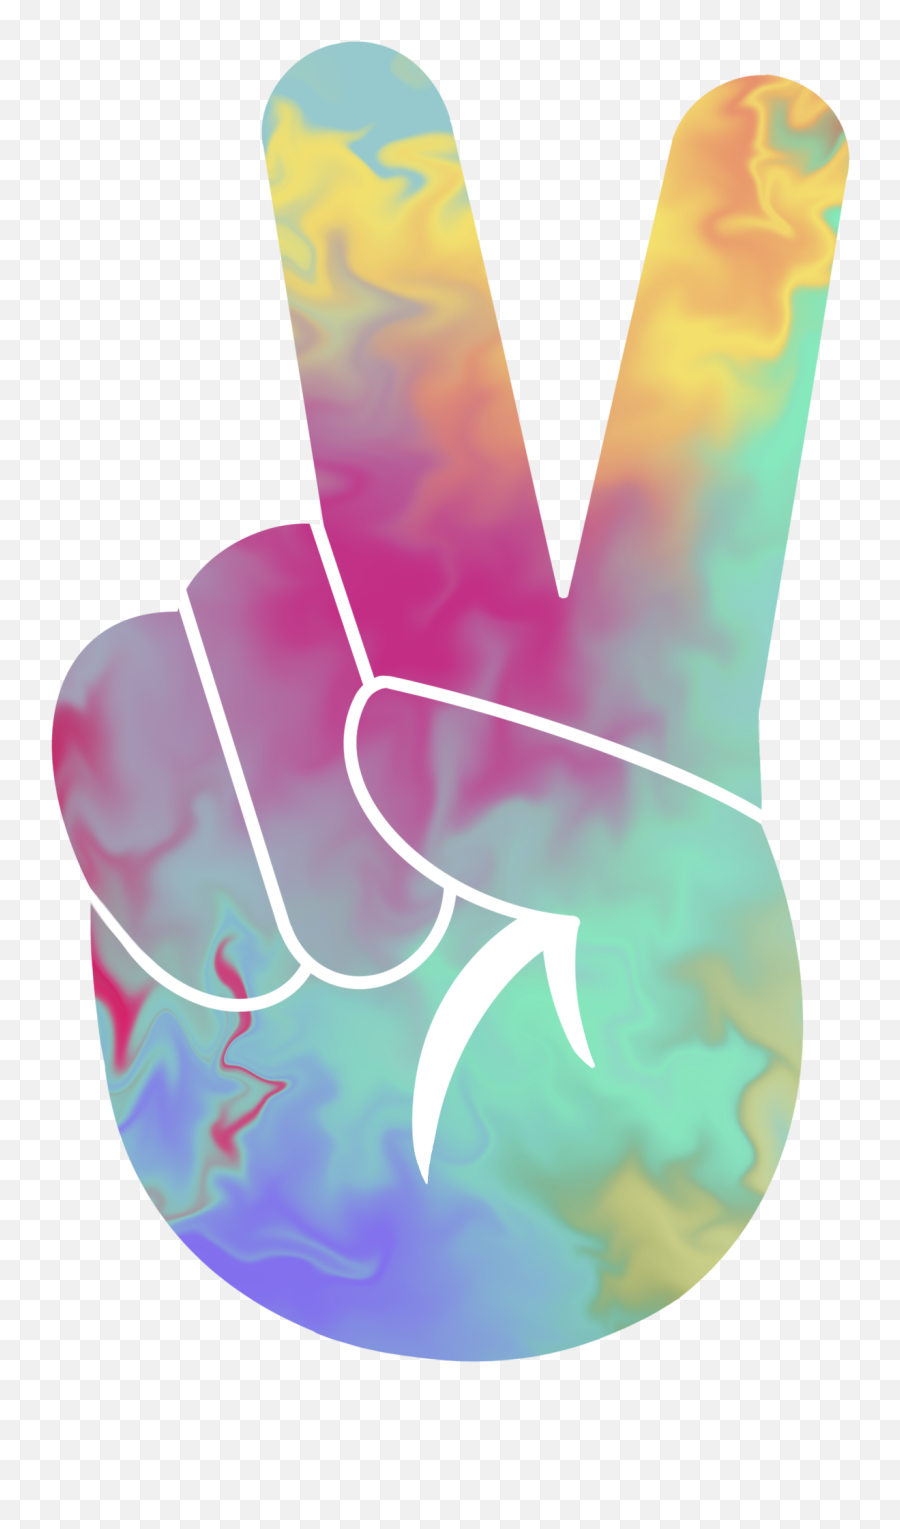 The Most Edited White Peace Picsart Emoji,Facebook Emoticon Peace Fingers